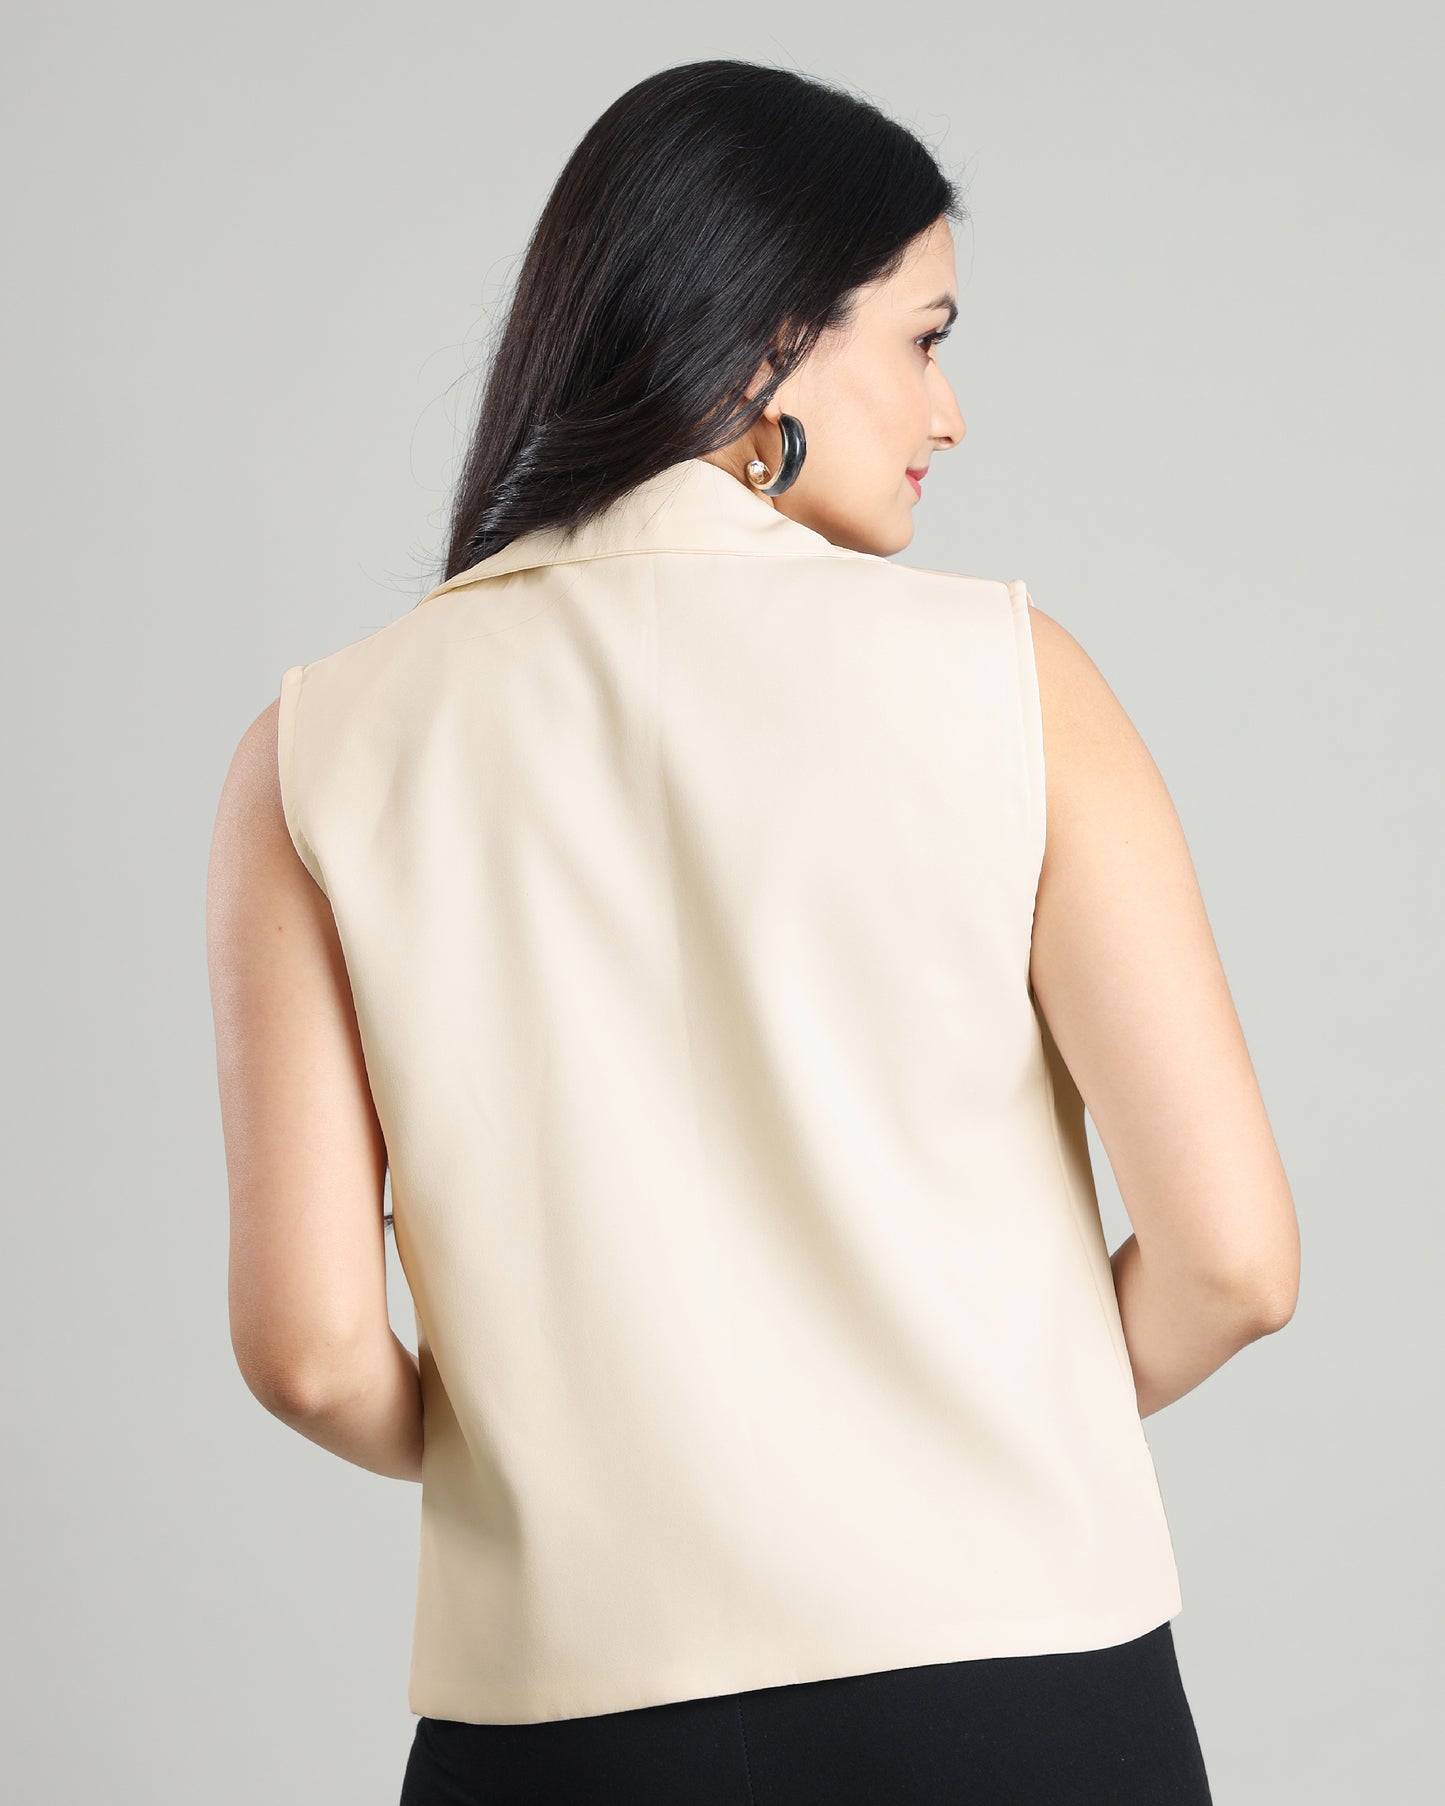 Women's Sleeveless Jacket For Posh Look